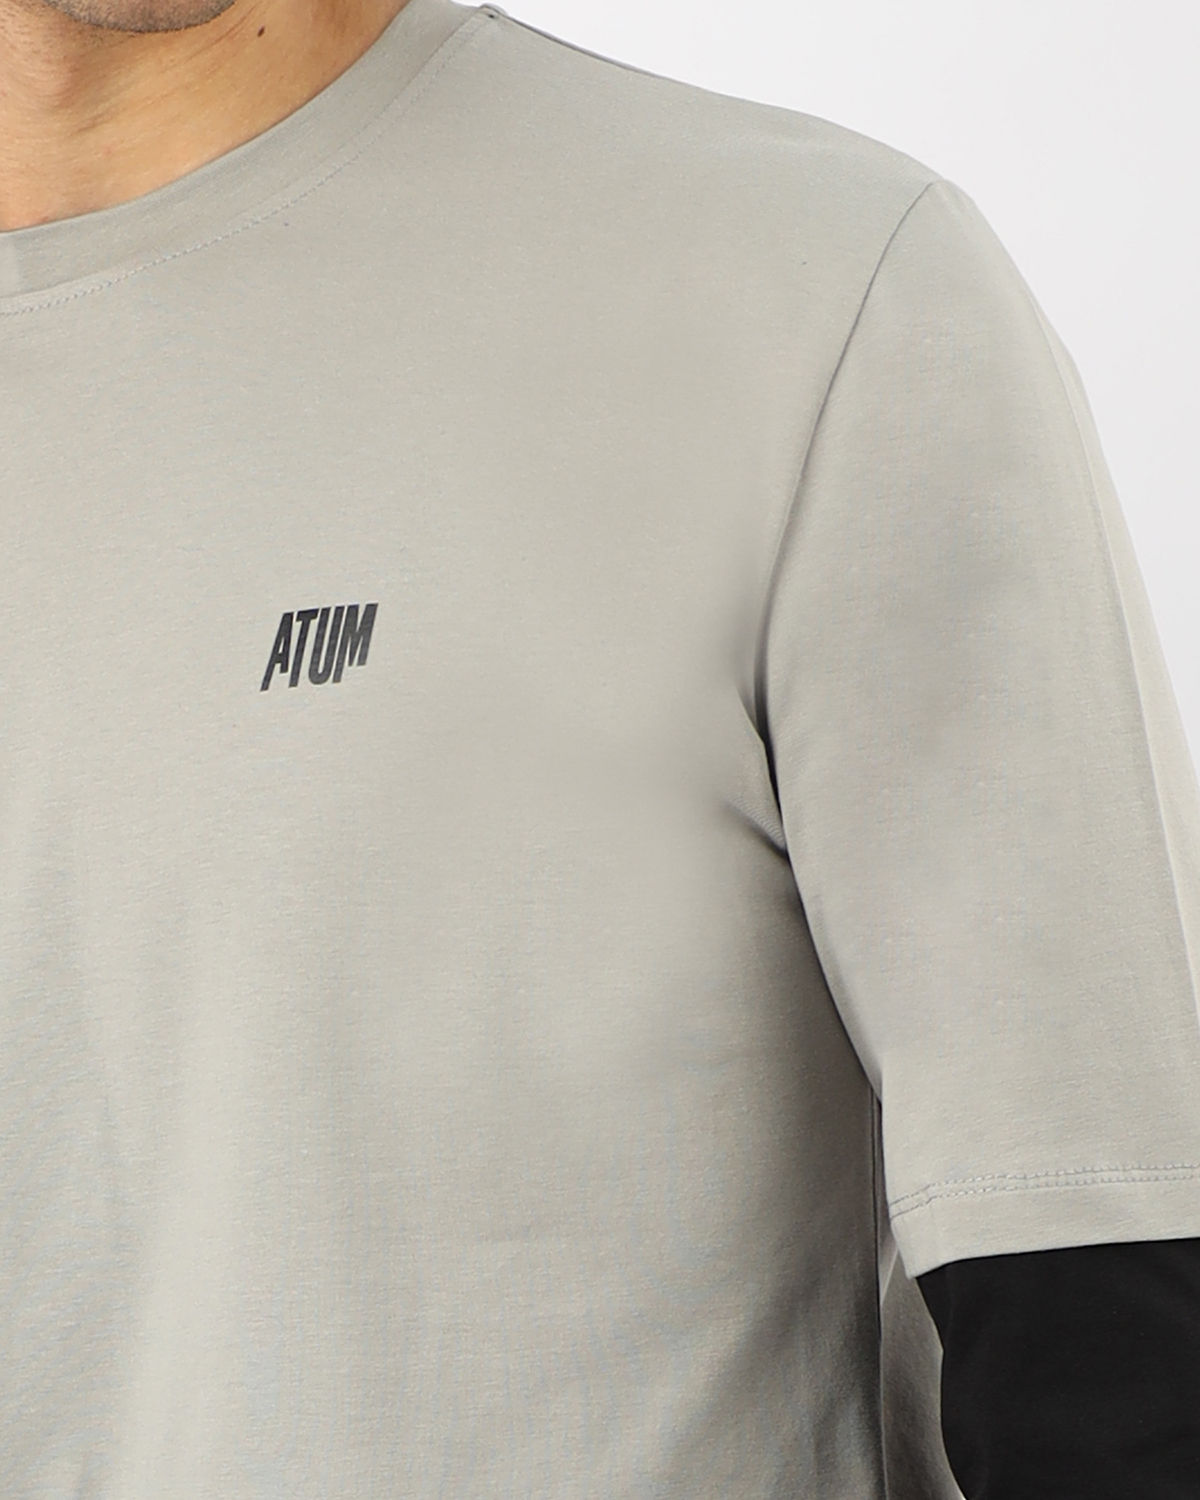 Atum Men's Cotton T-Shirt - Atum Egypt